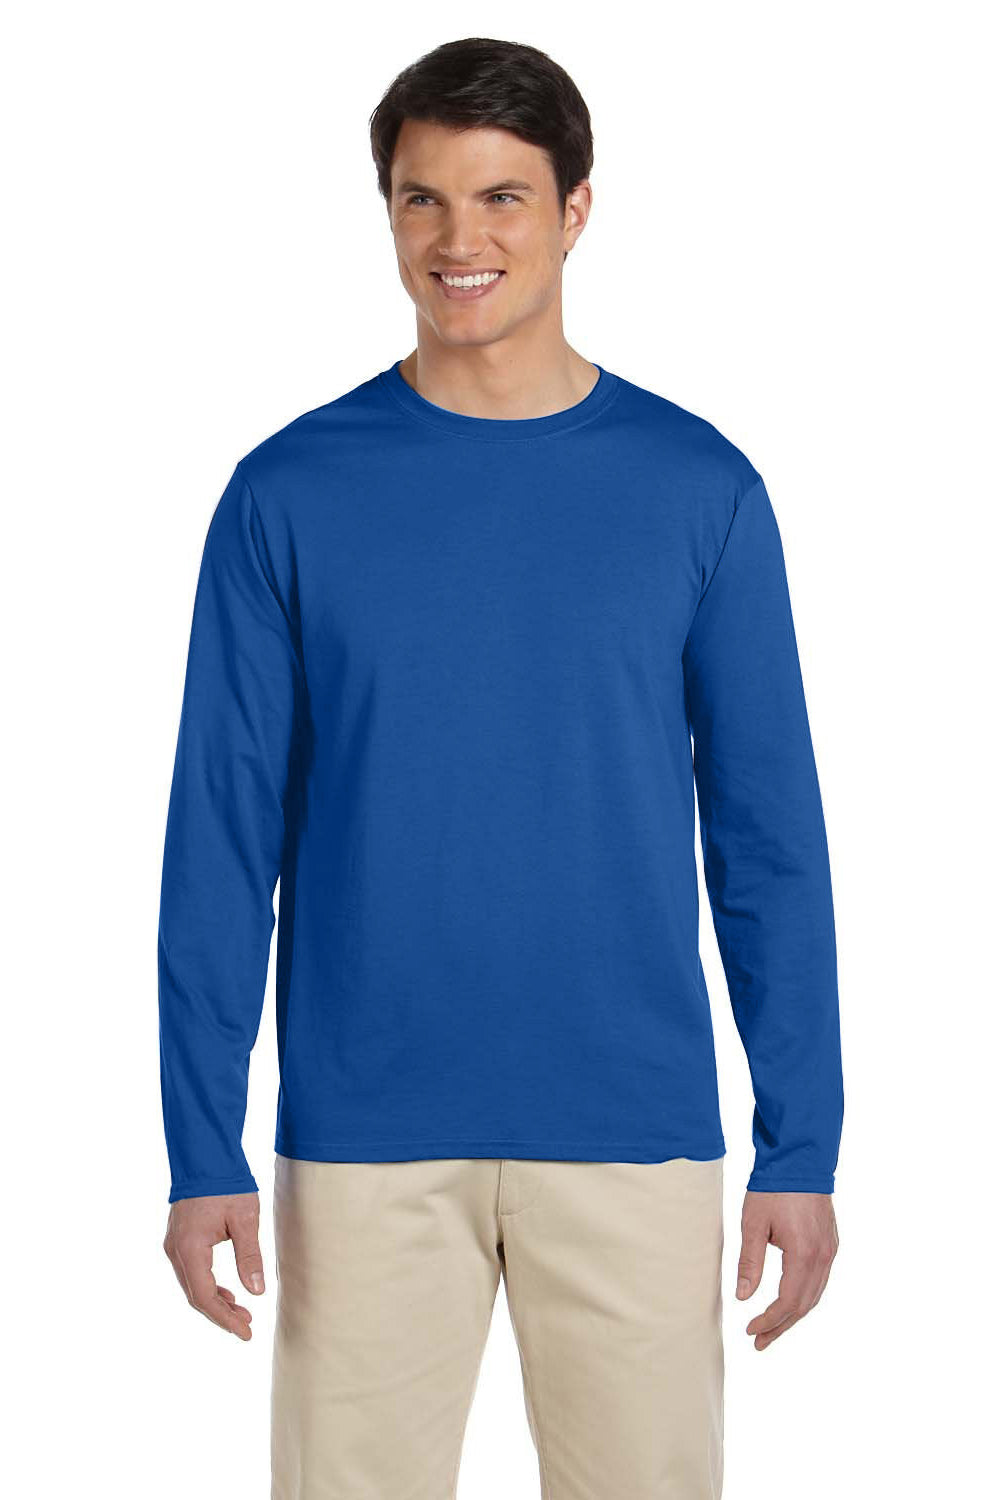 Gildan 64400/G644 Mens Softstyle Long Sleeve Crewneck T-Shirt Royal Blue Front